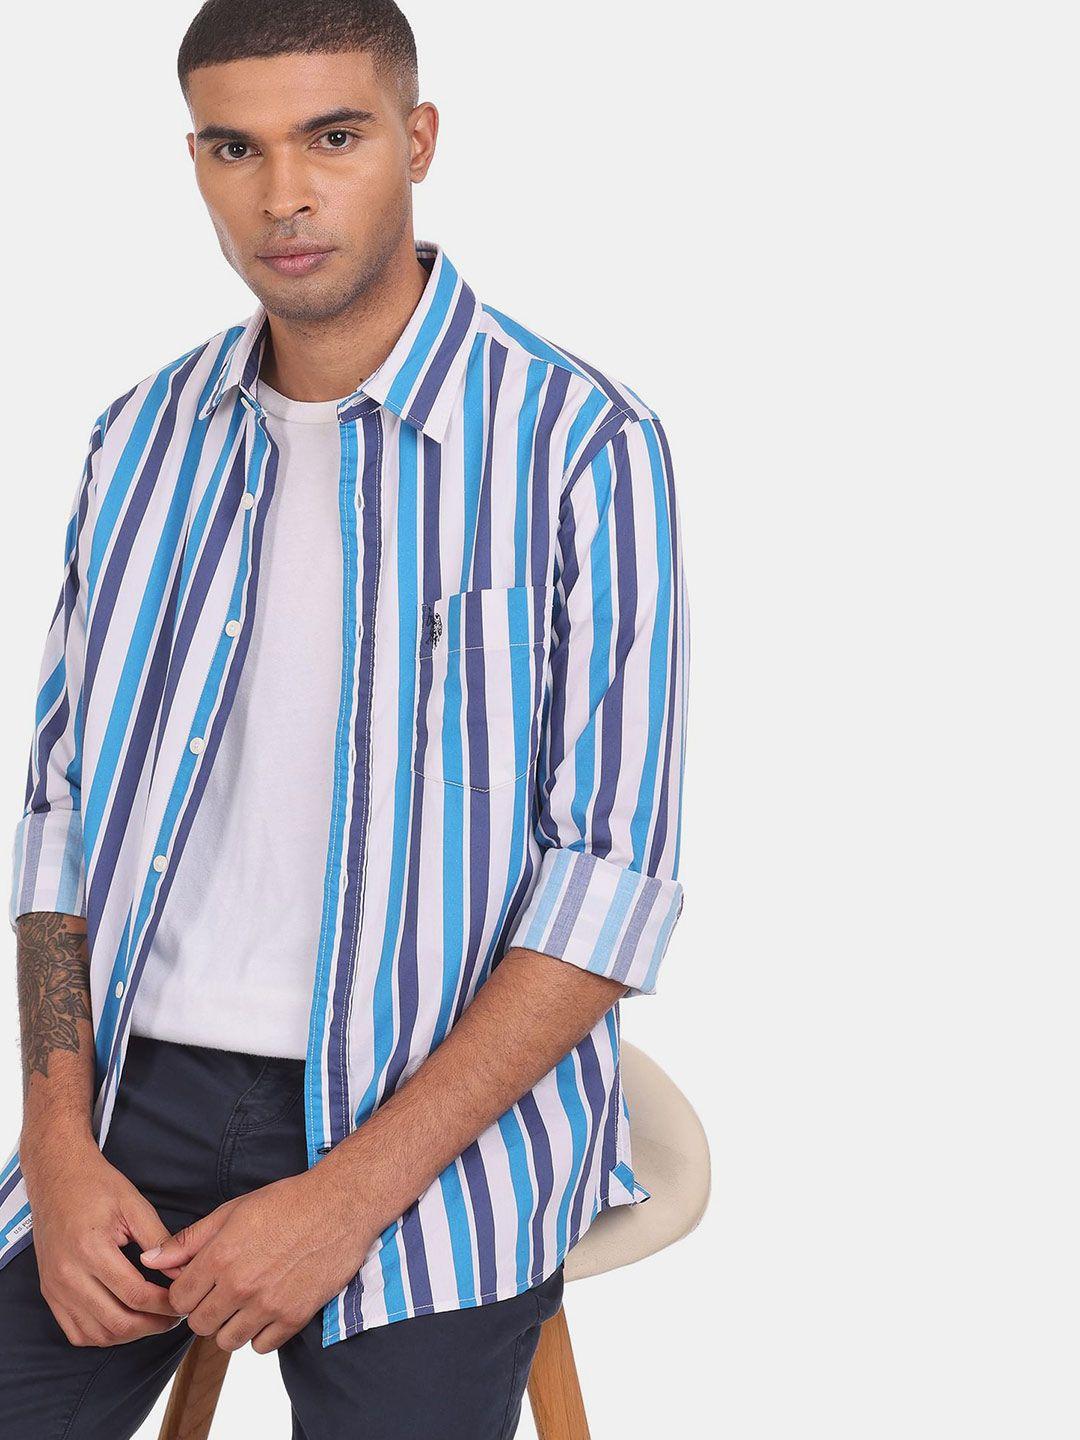 u s polo assn men blue striped 100% cotton casual shirt